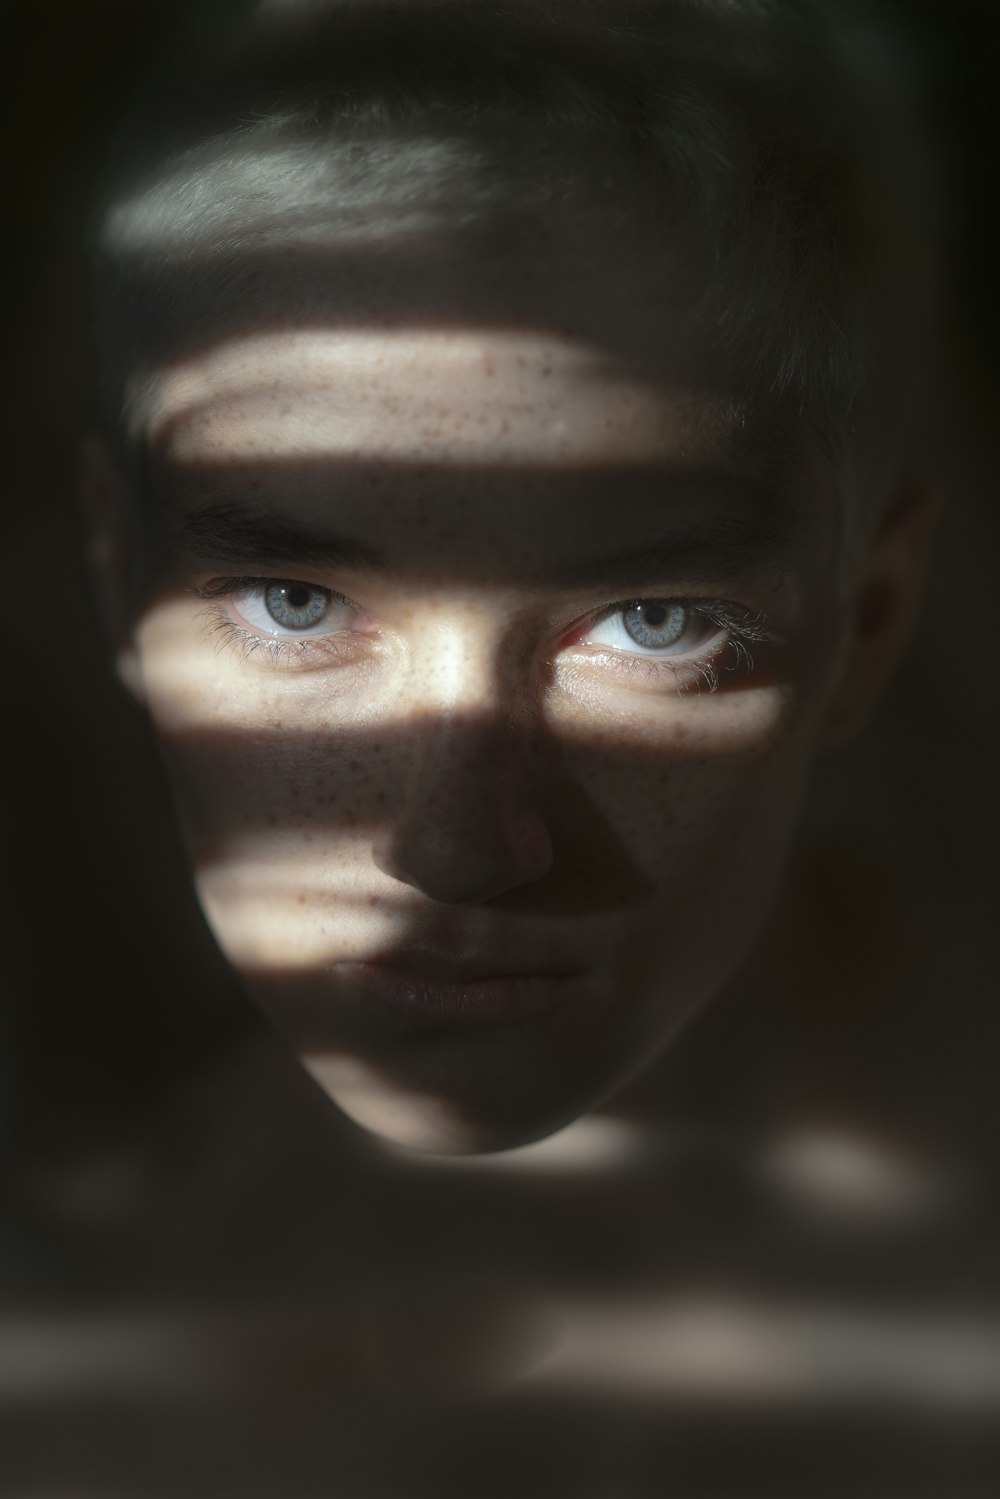 a woman's face is shown through a shadow